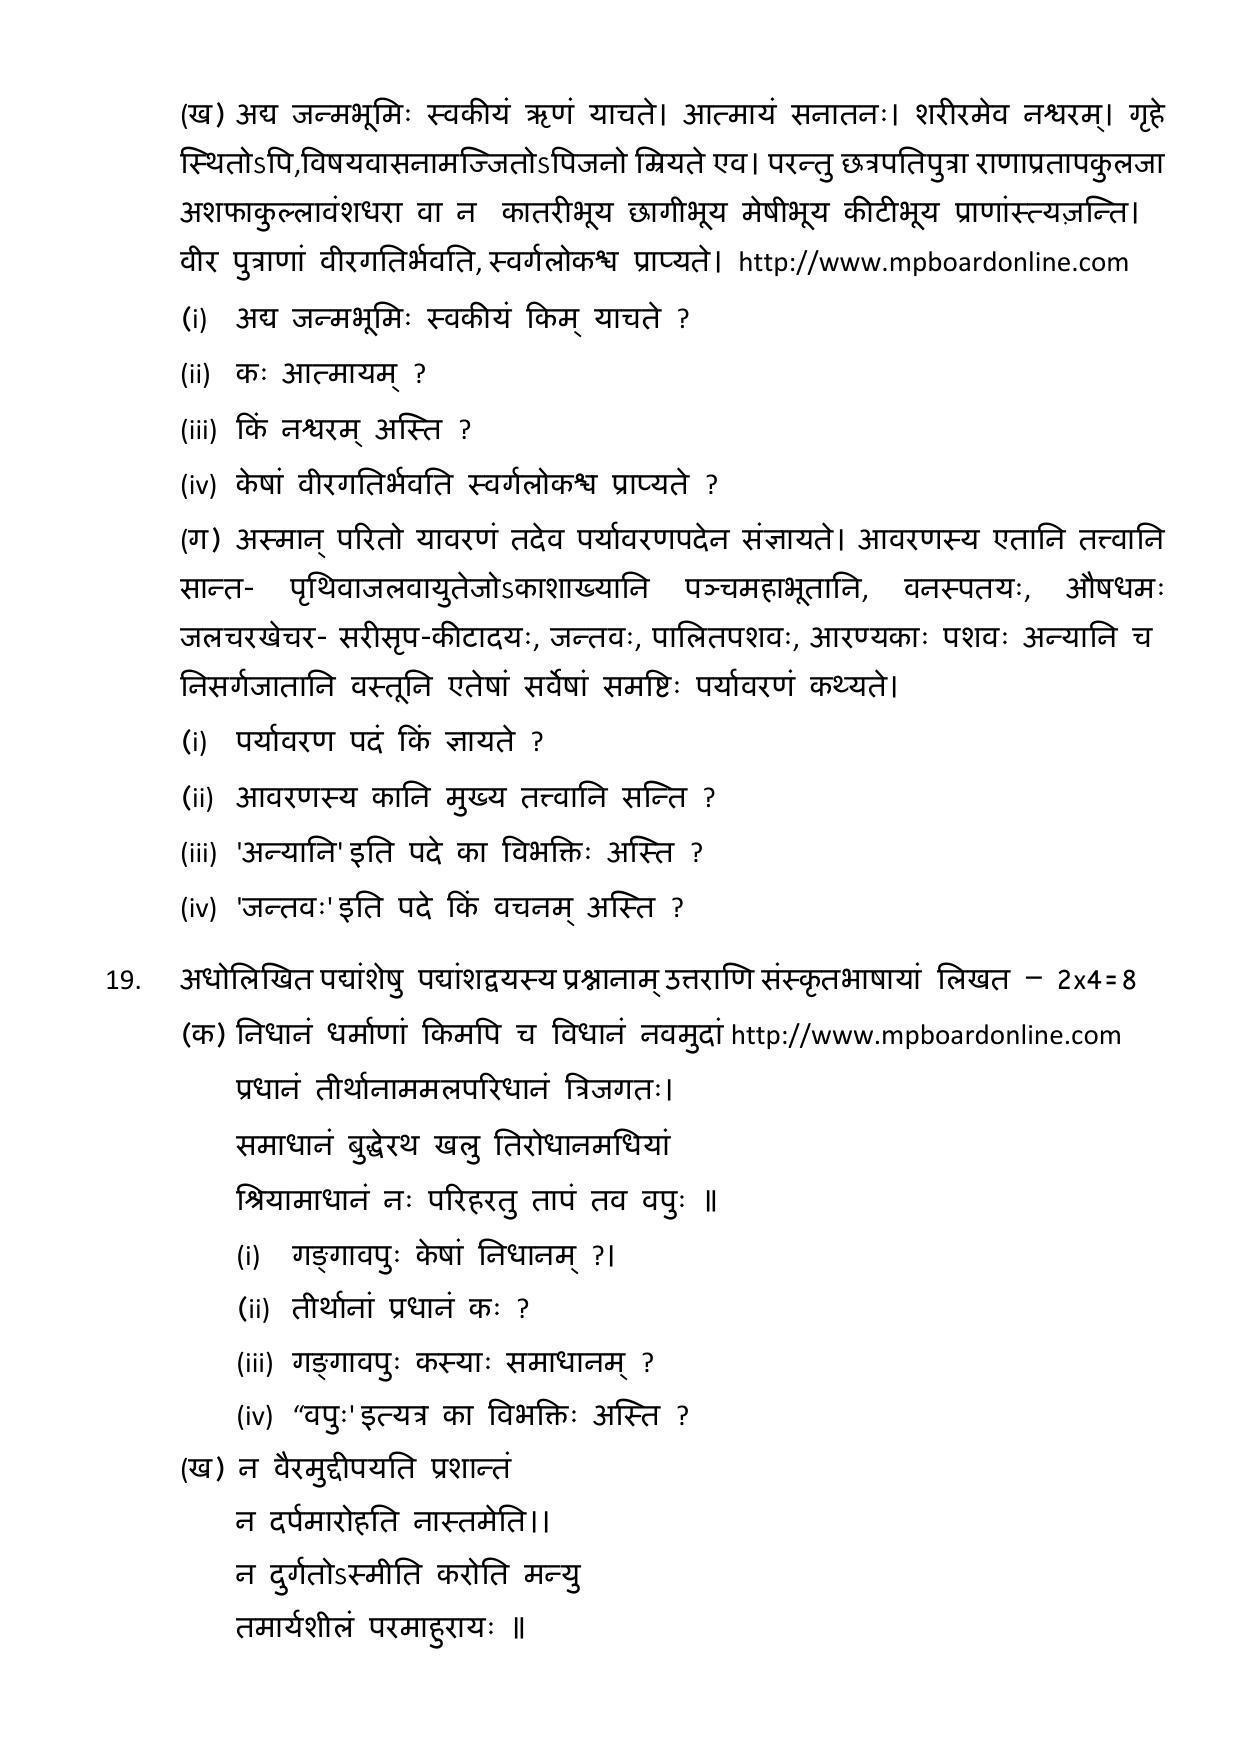 MP Board Class 12 Sanskrit 2019 Question Paper - Page 7